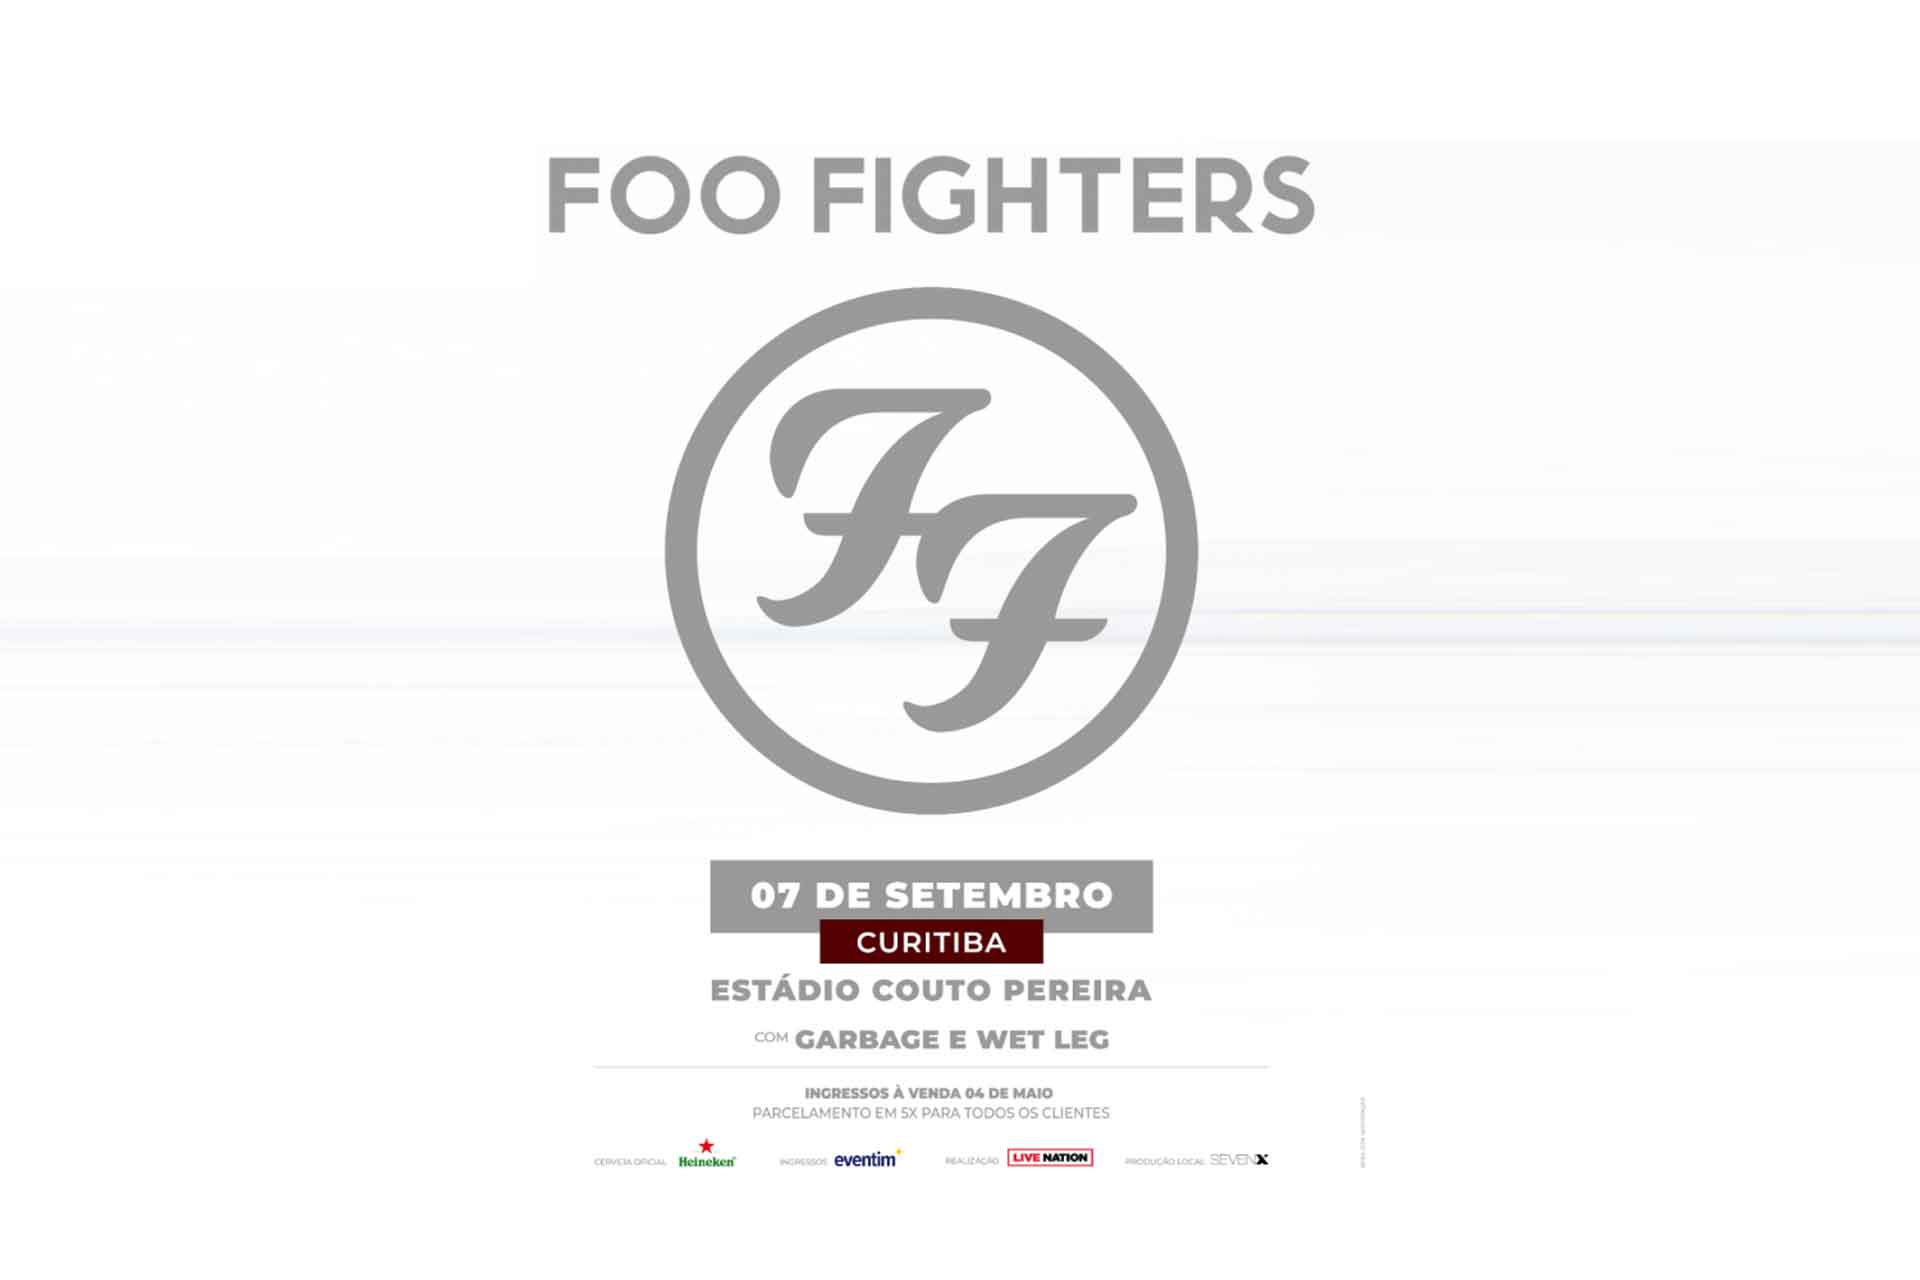 Foo Fighters confirma show em Curitiba